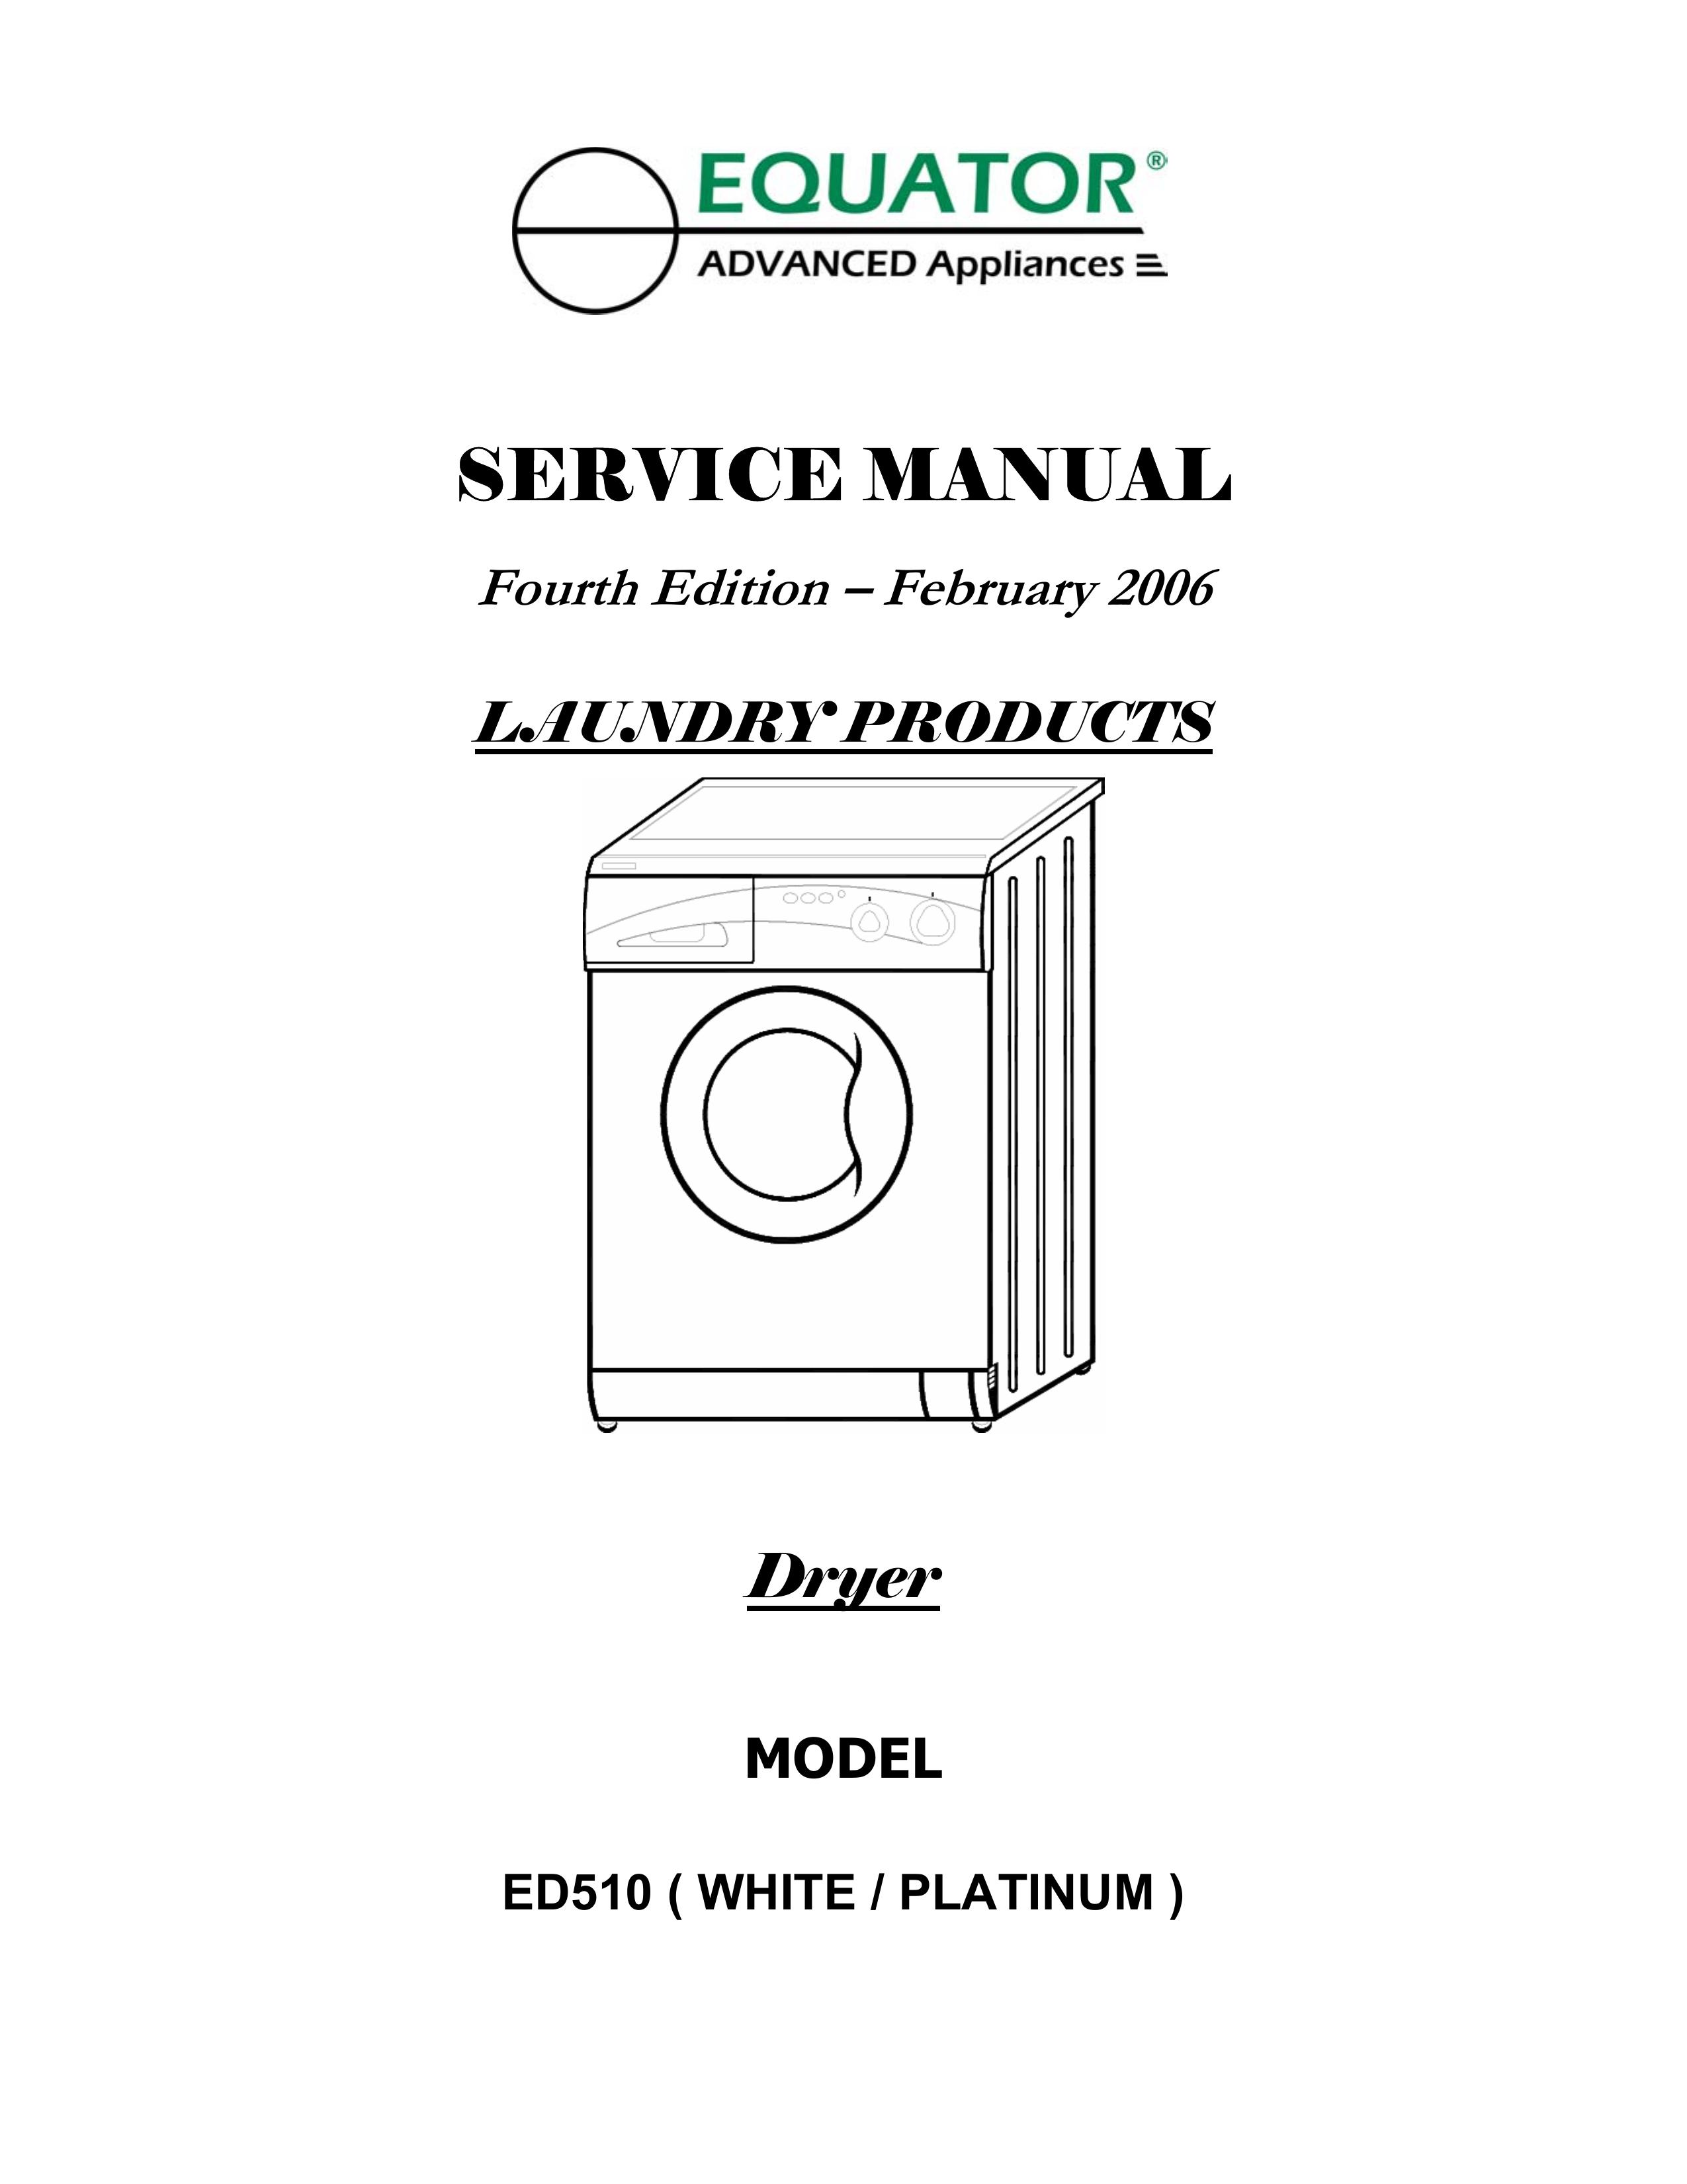 Equator ED510 Washer/Dryer User Manual